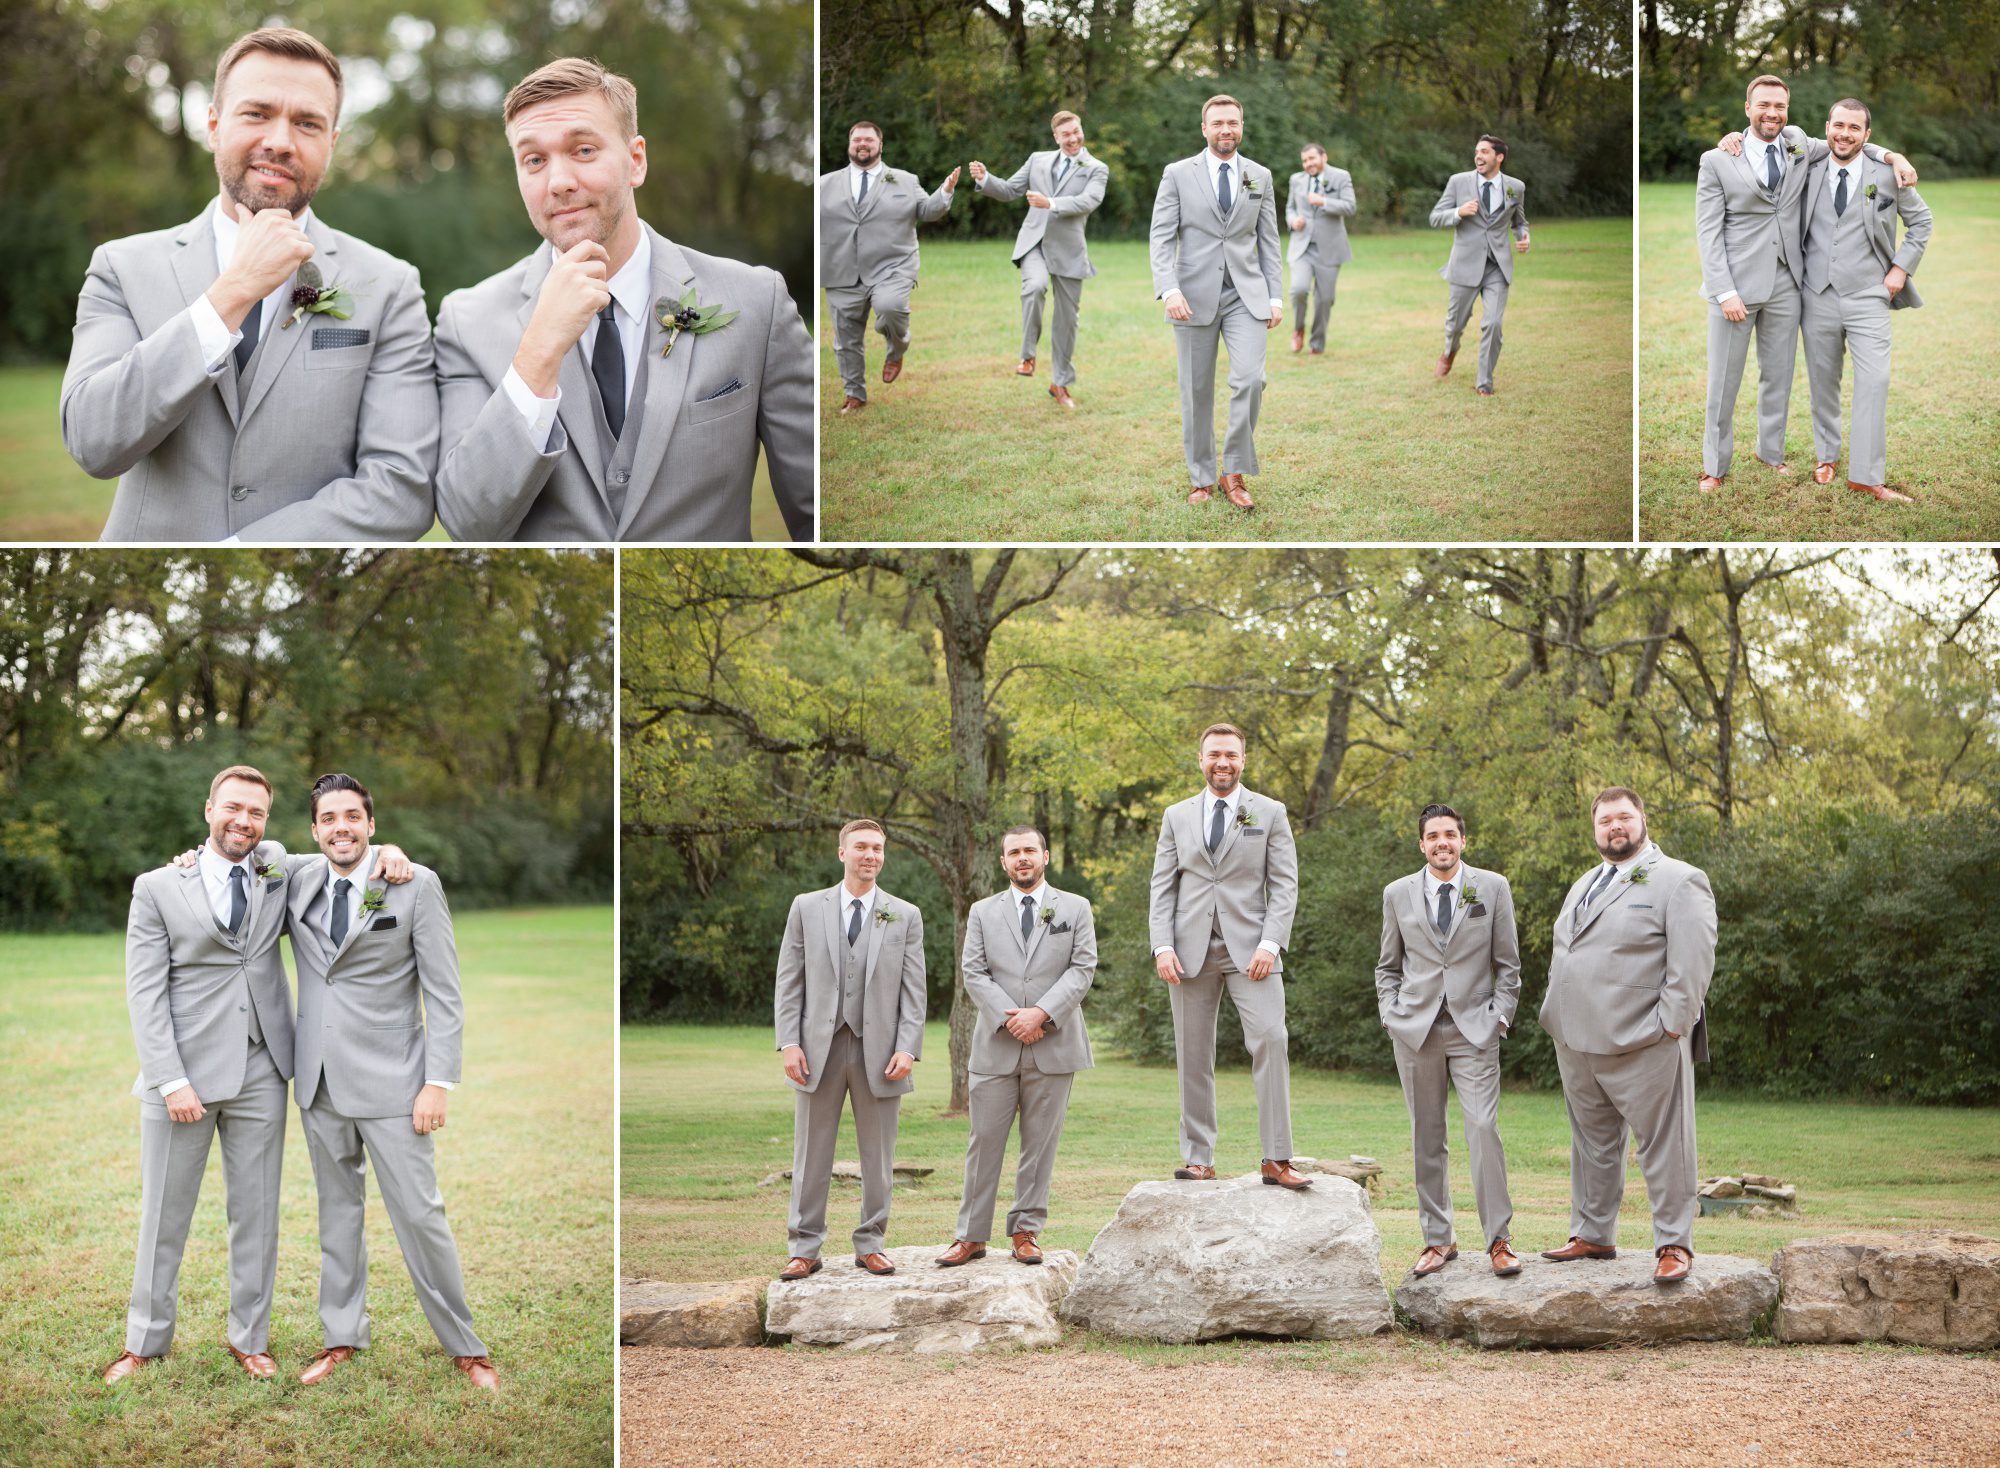 Silly groomsmen photos before wedding ceremony photography at Green Door Gourmet in Nashville, TN